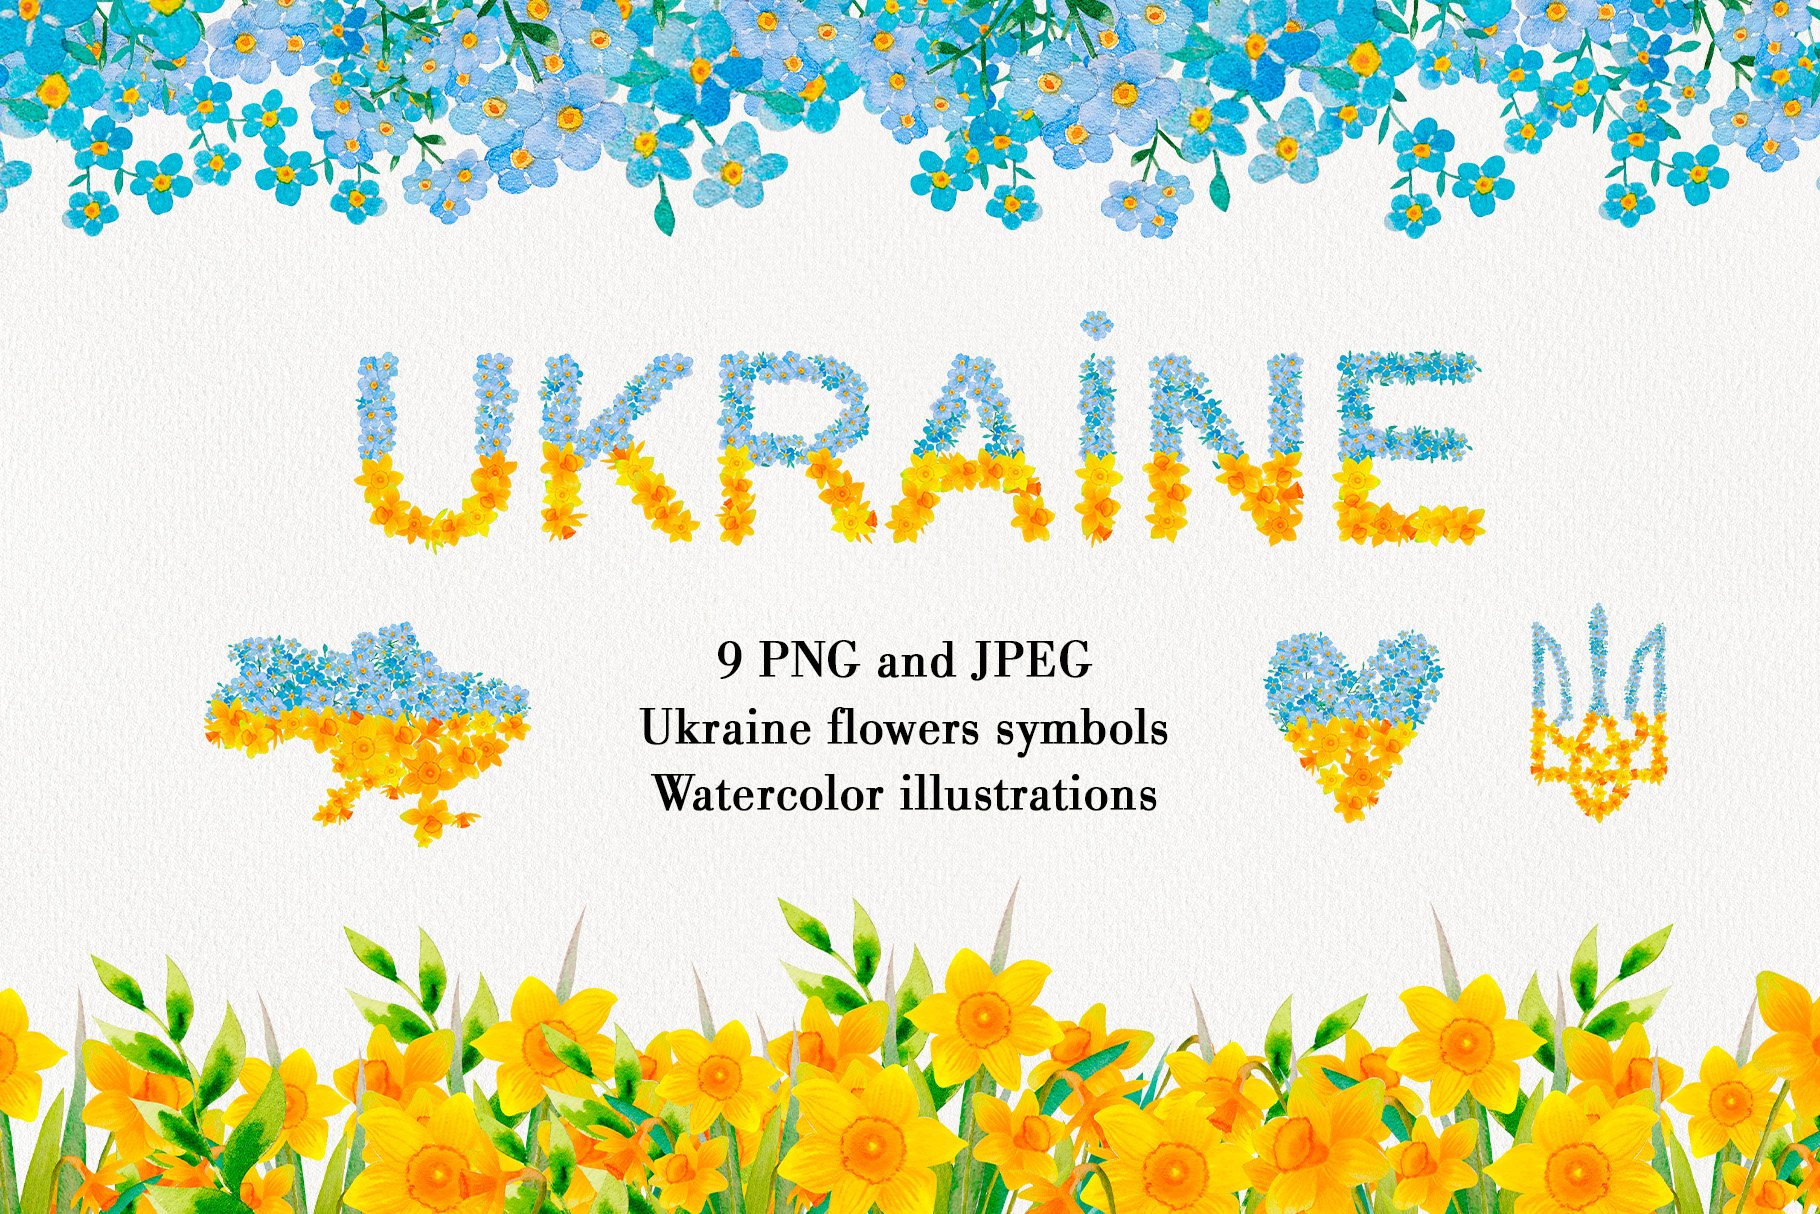 Watercolor spring Ukranian symbols preview image.